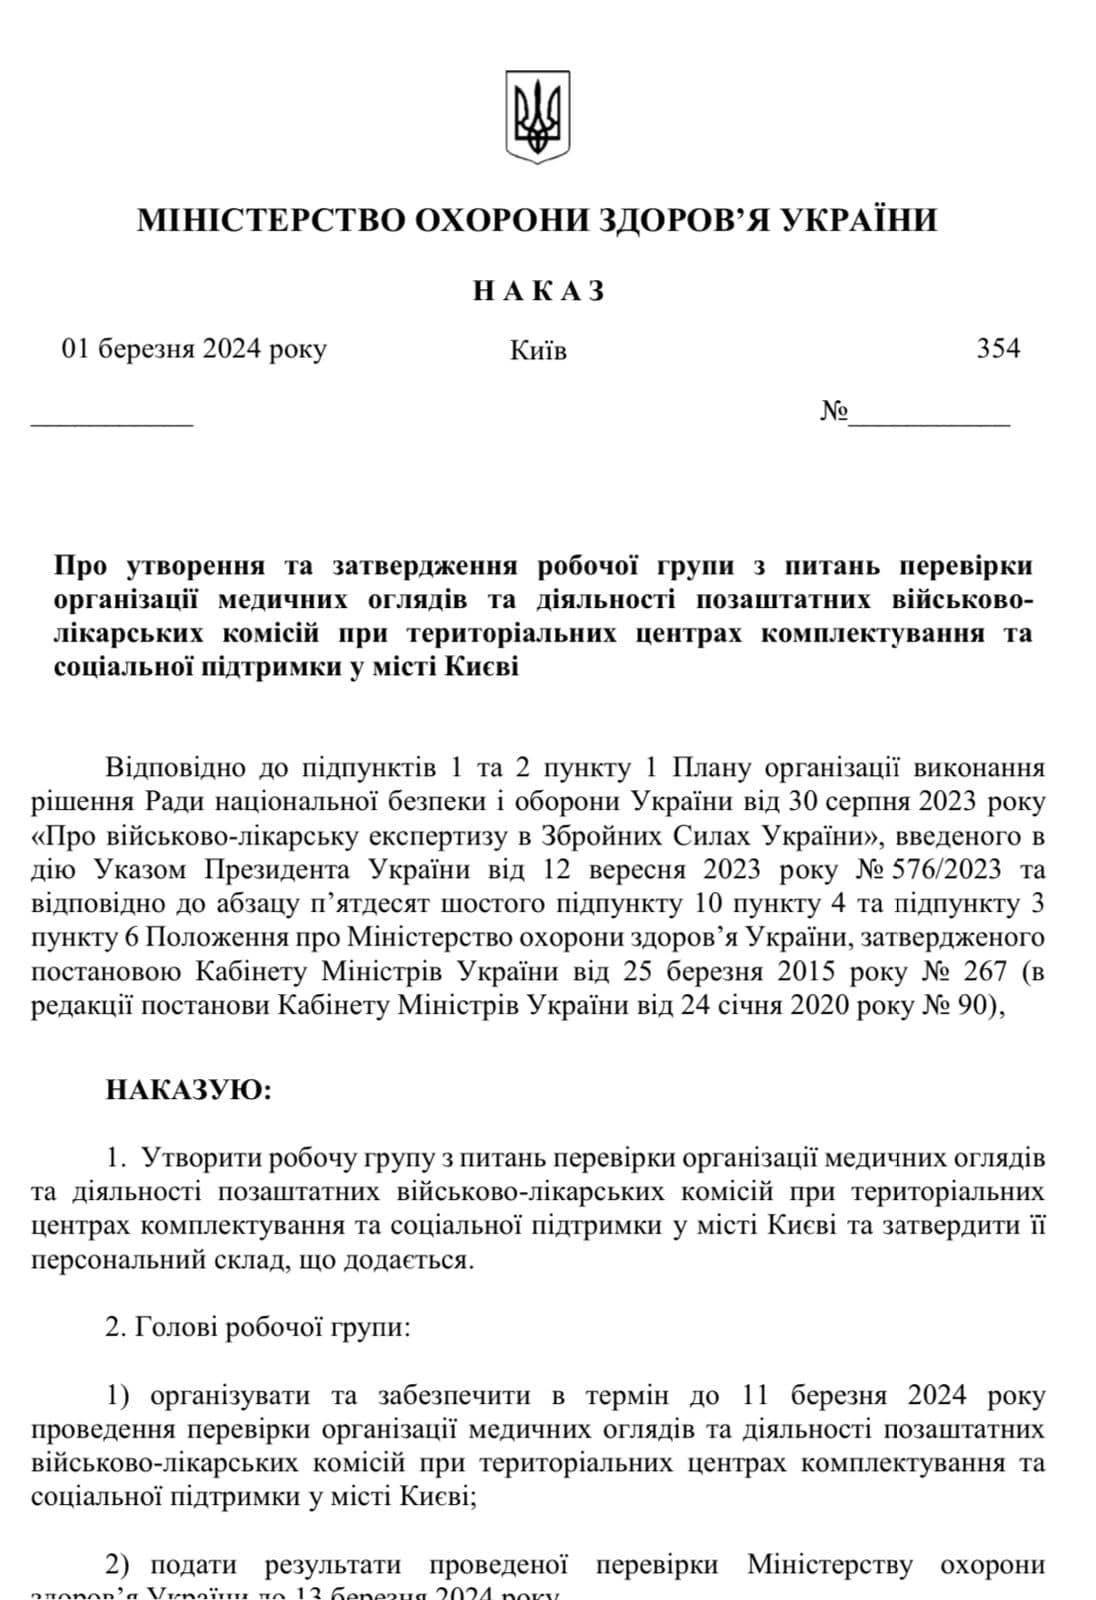 Скріншот наказу міністра Віктора Ляшка